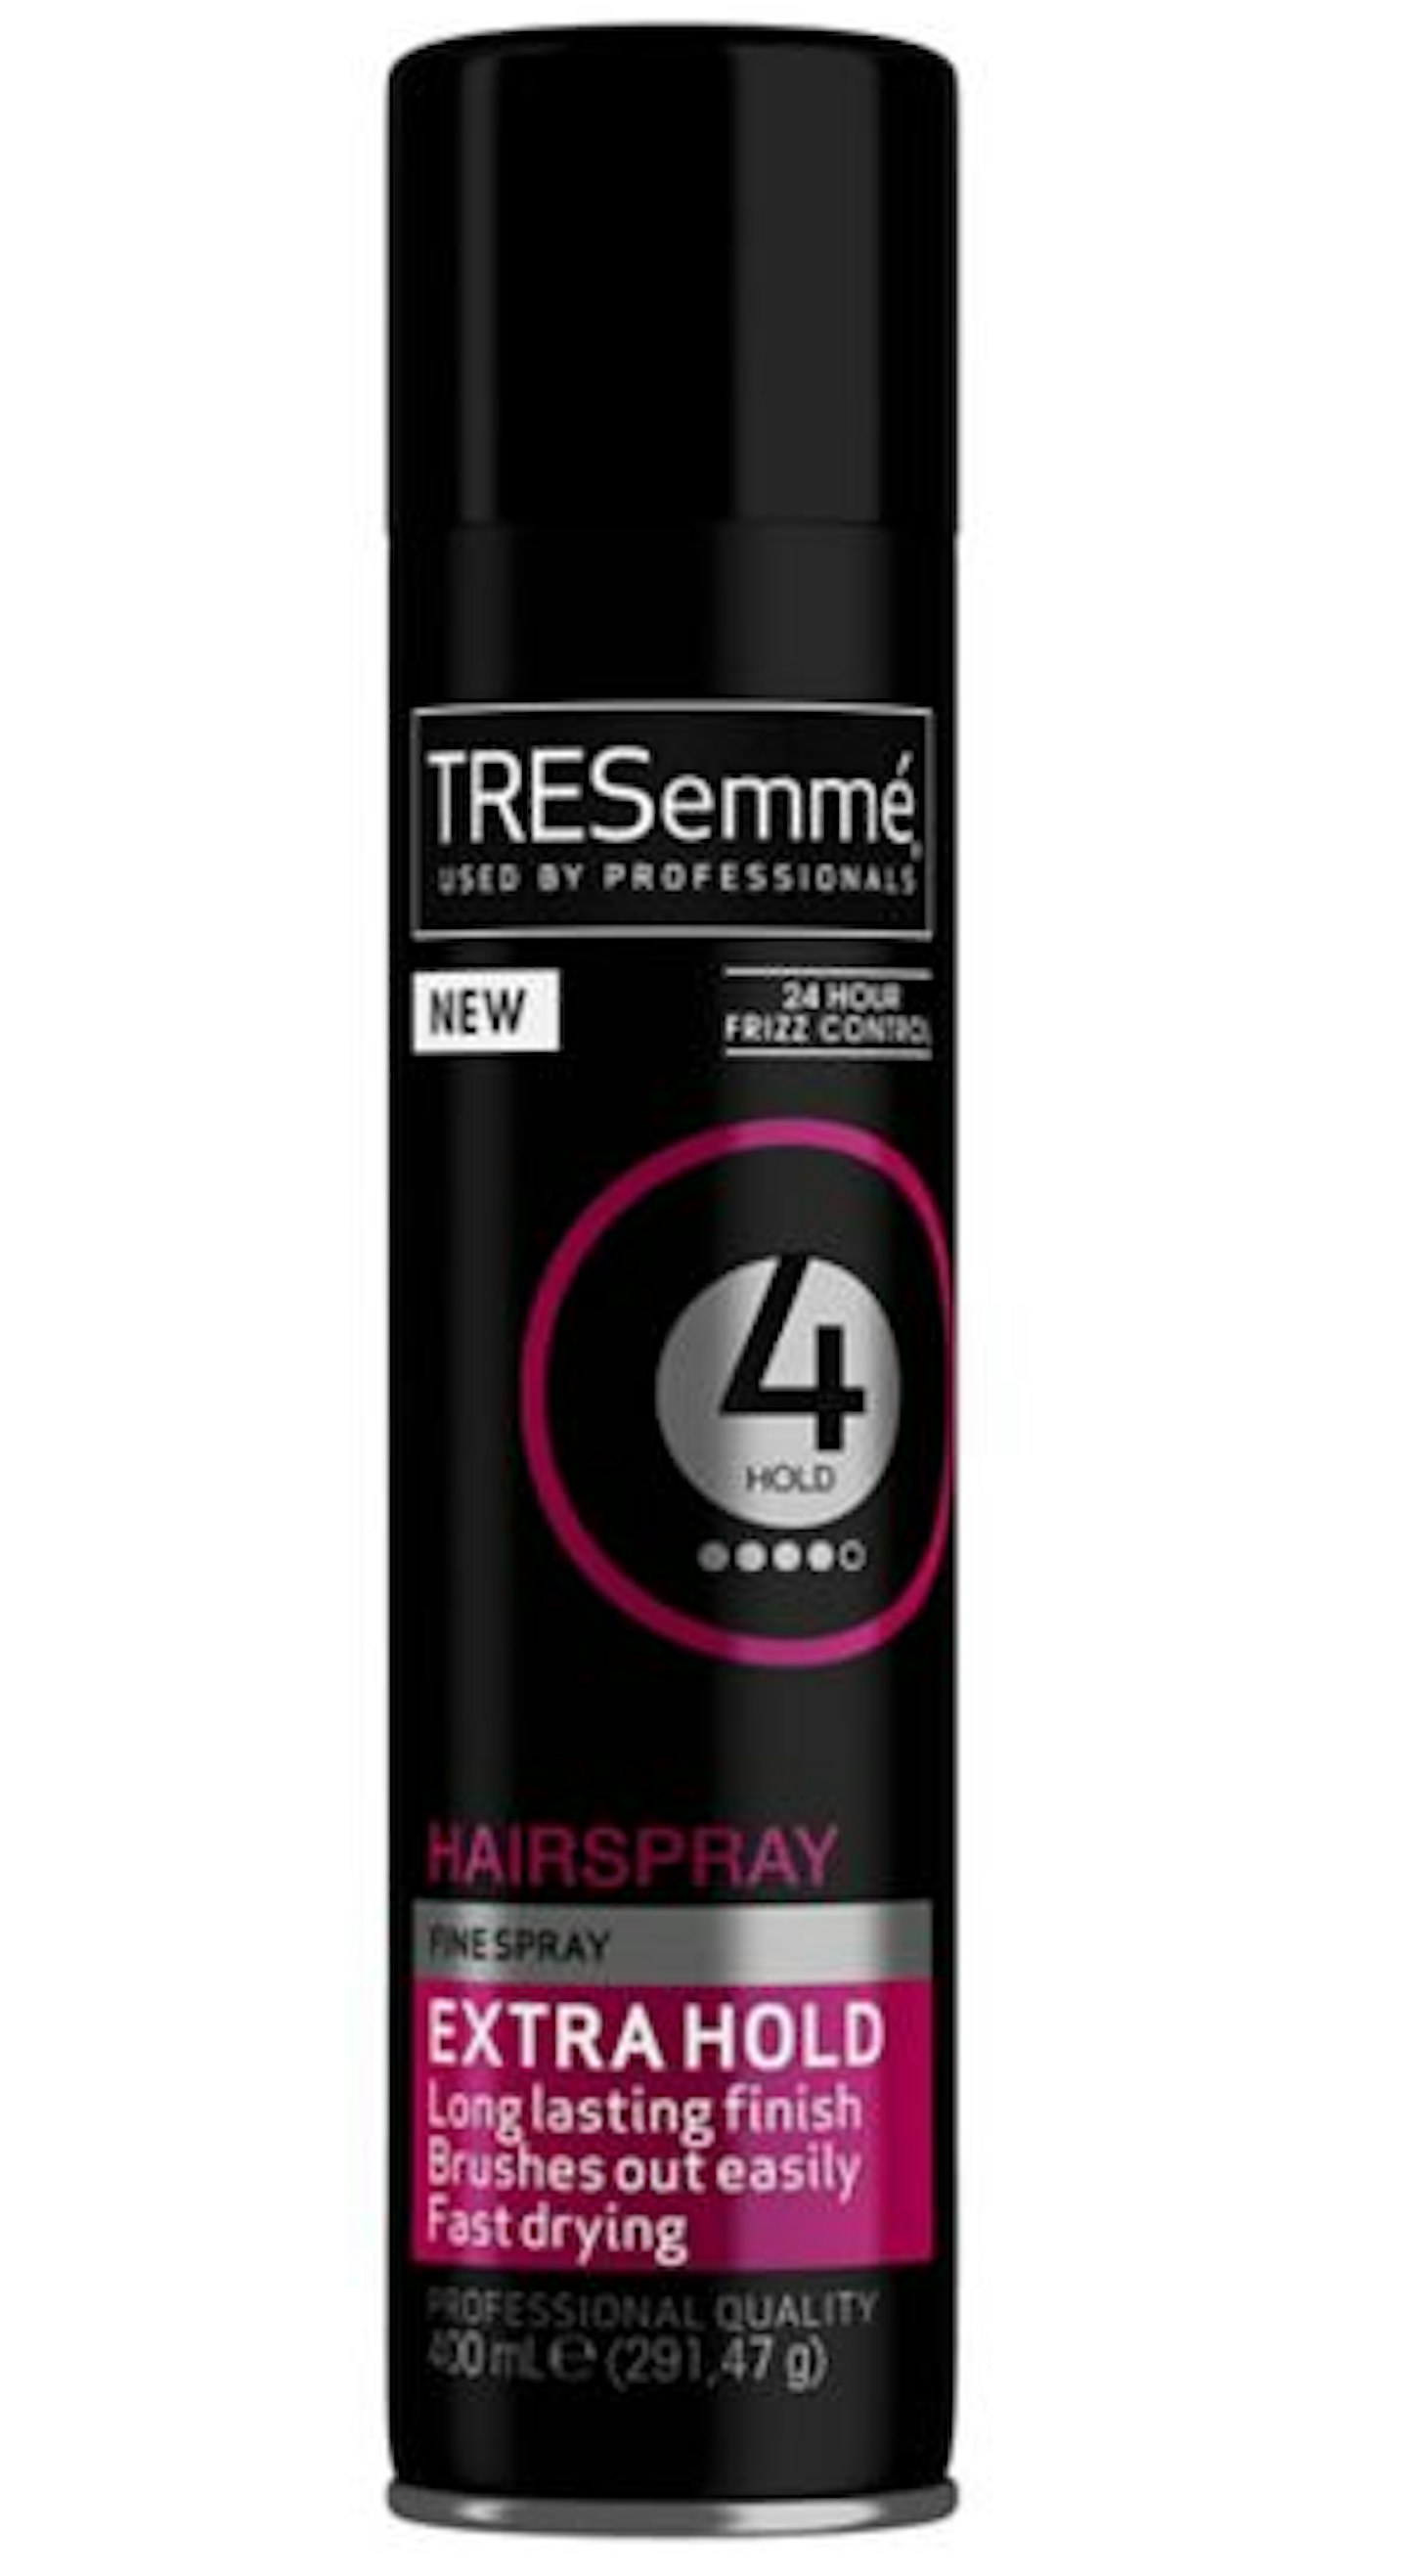 TRESemme Extra Hold Hairspray, £4.99